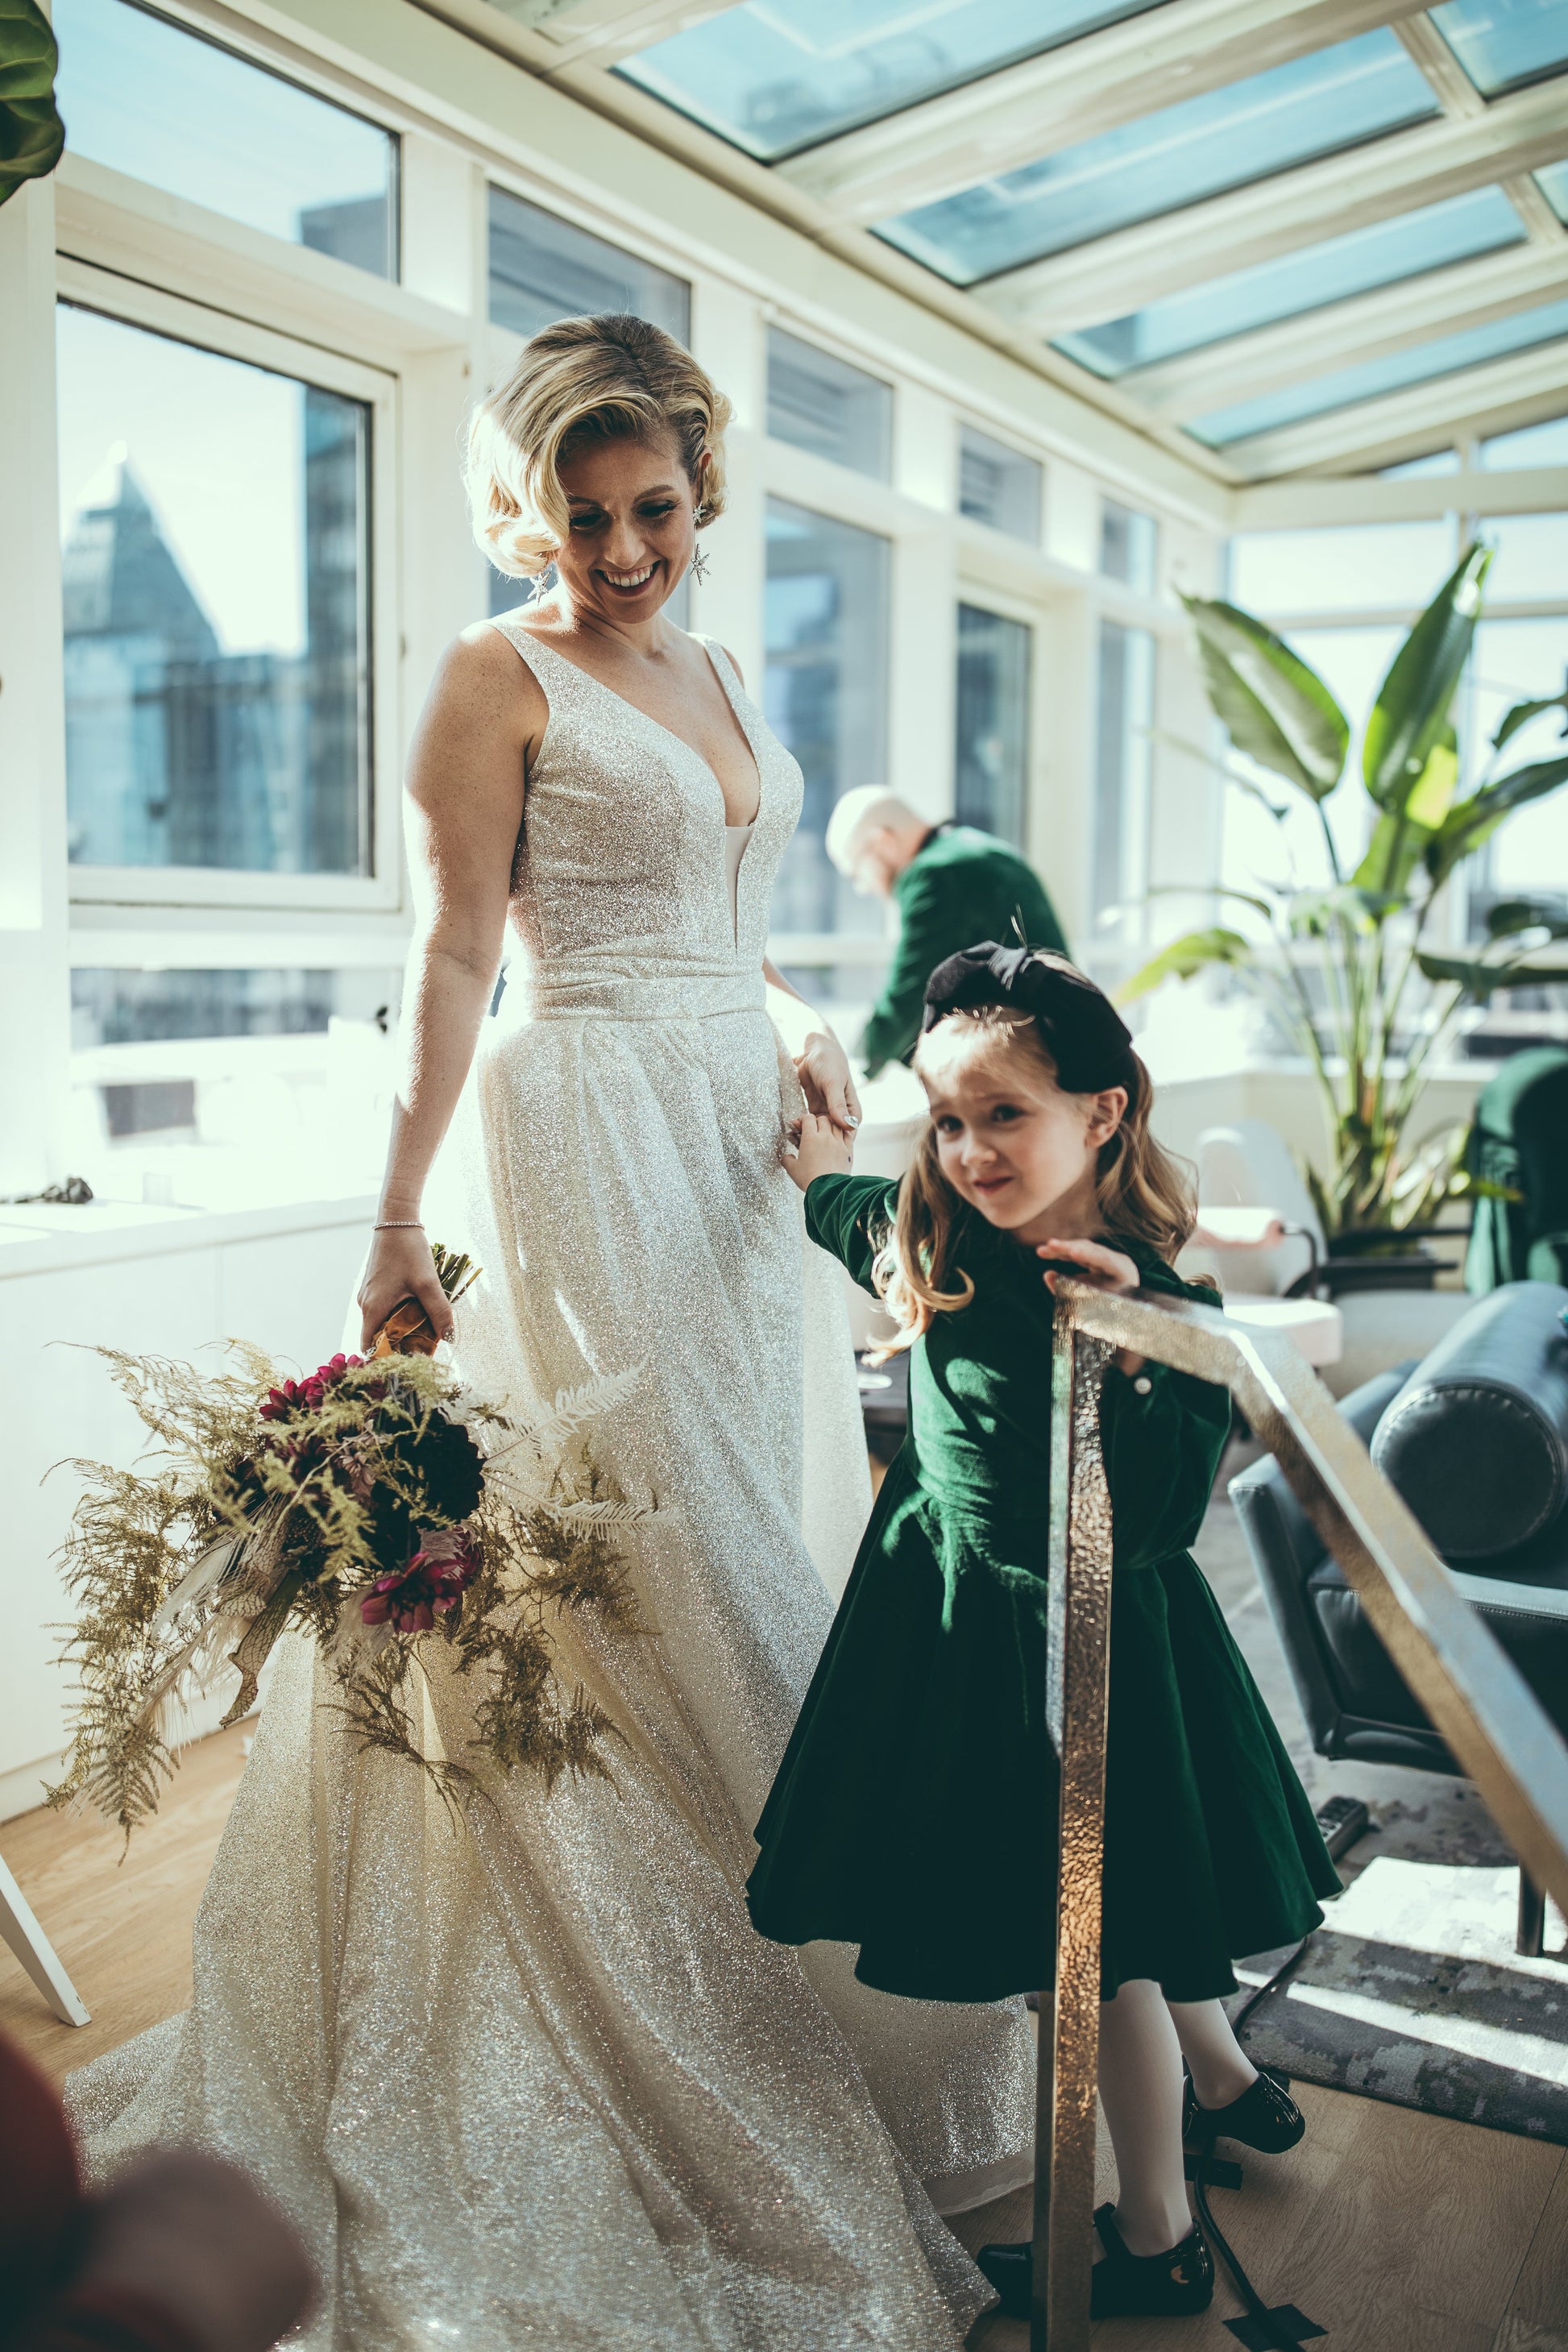 Flower girl in a green velvet dress standing next to a bride.